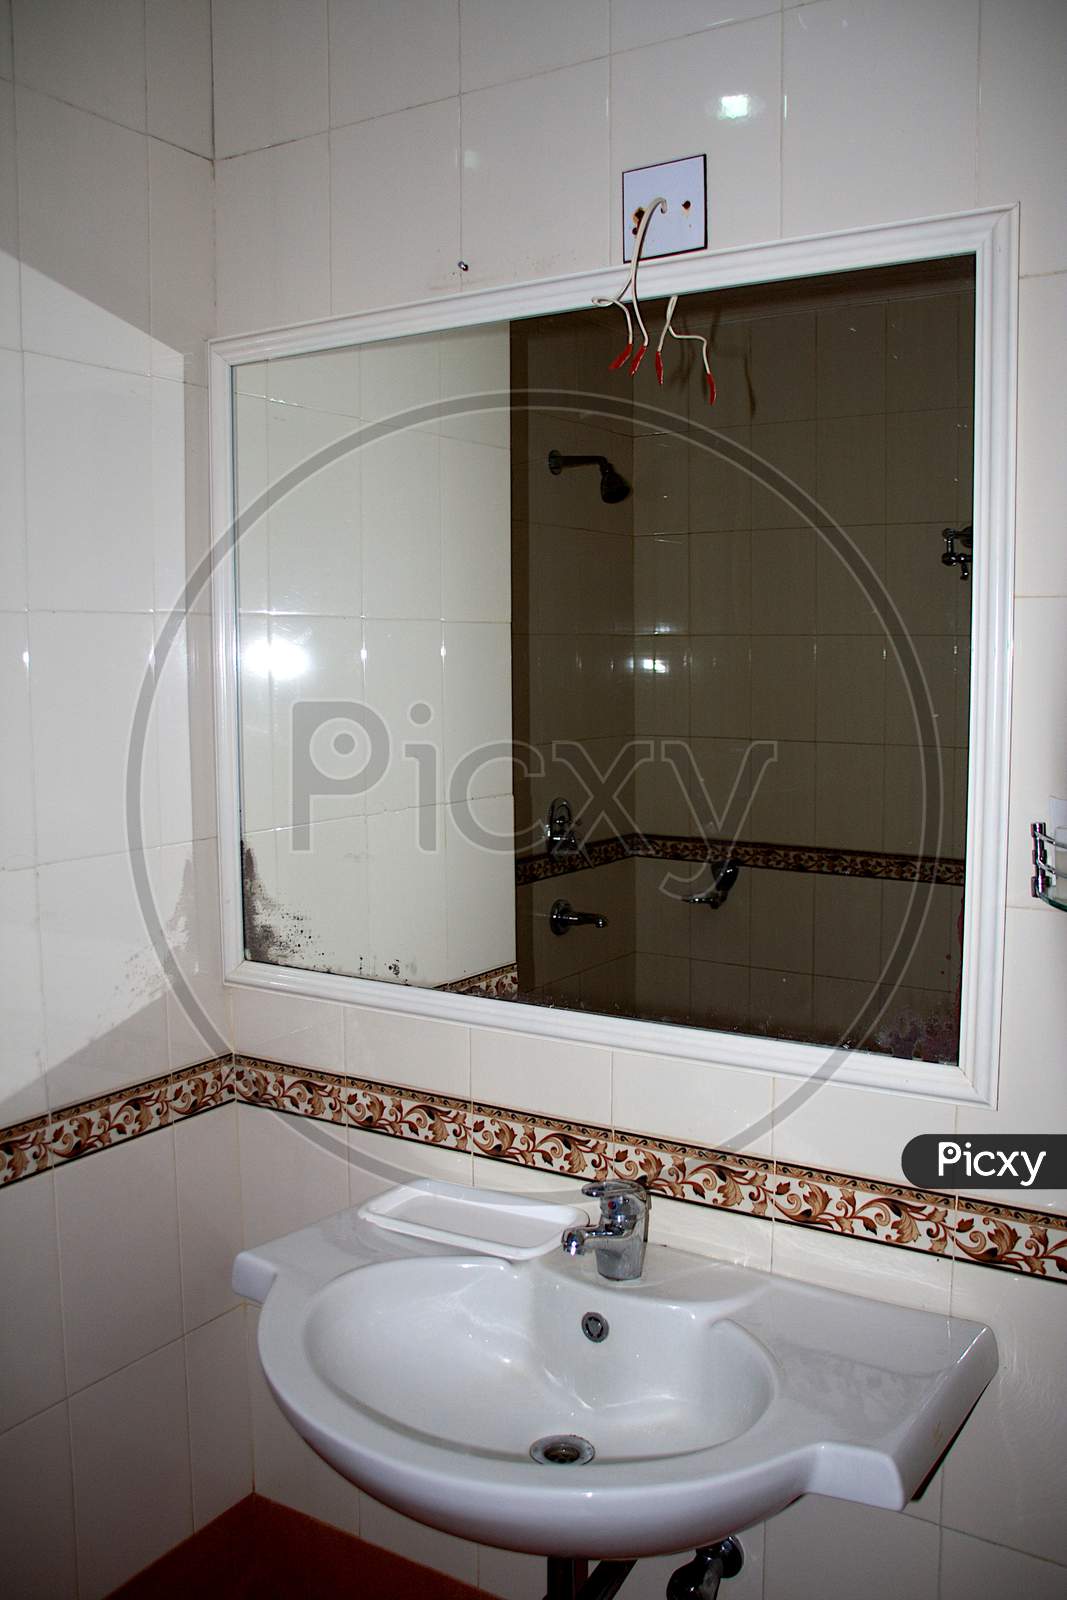 Wash Basin And Mirror In Wash-Room